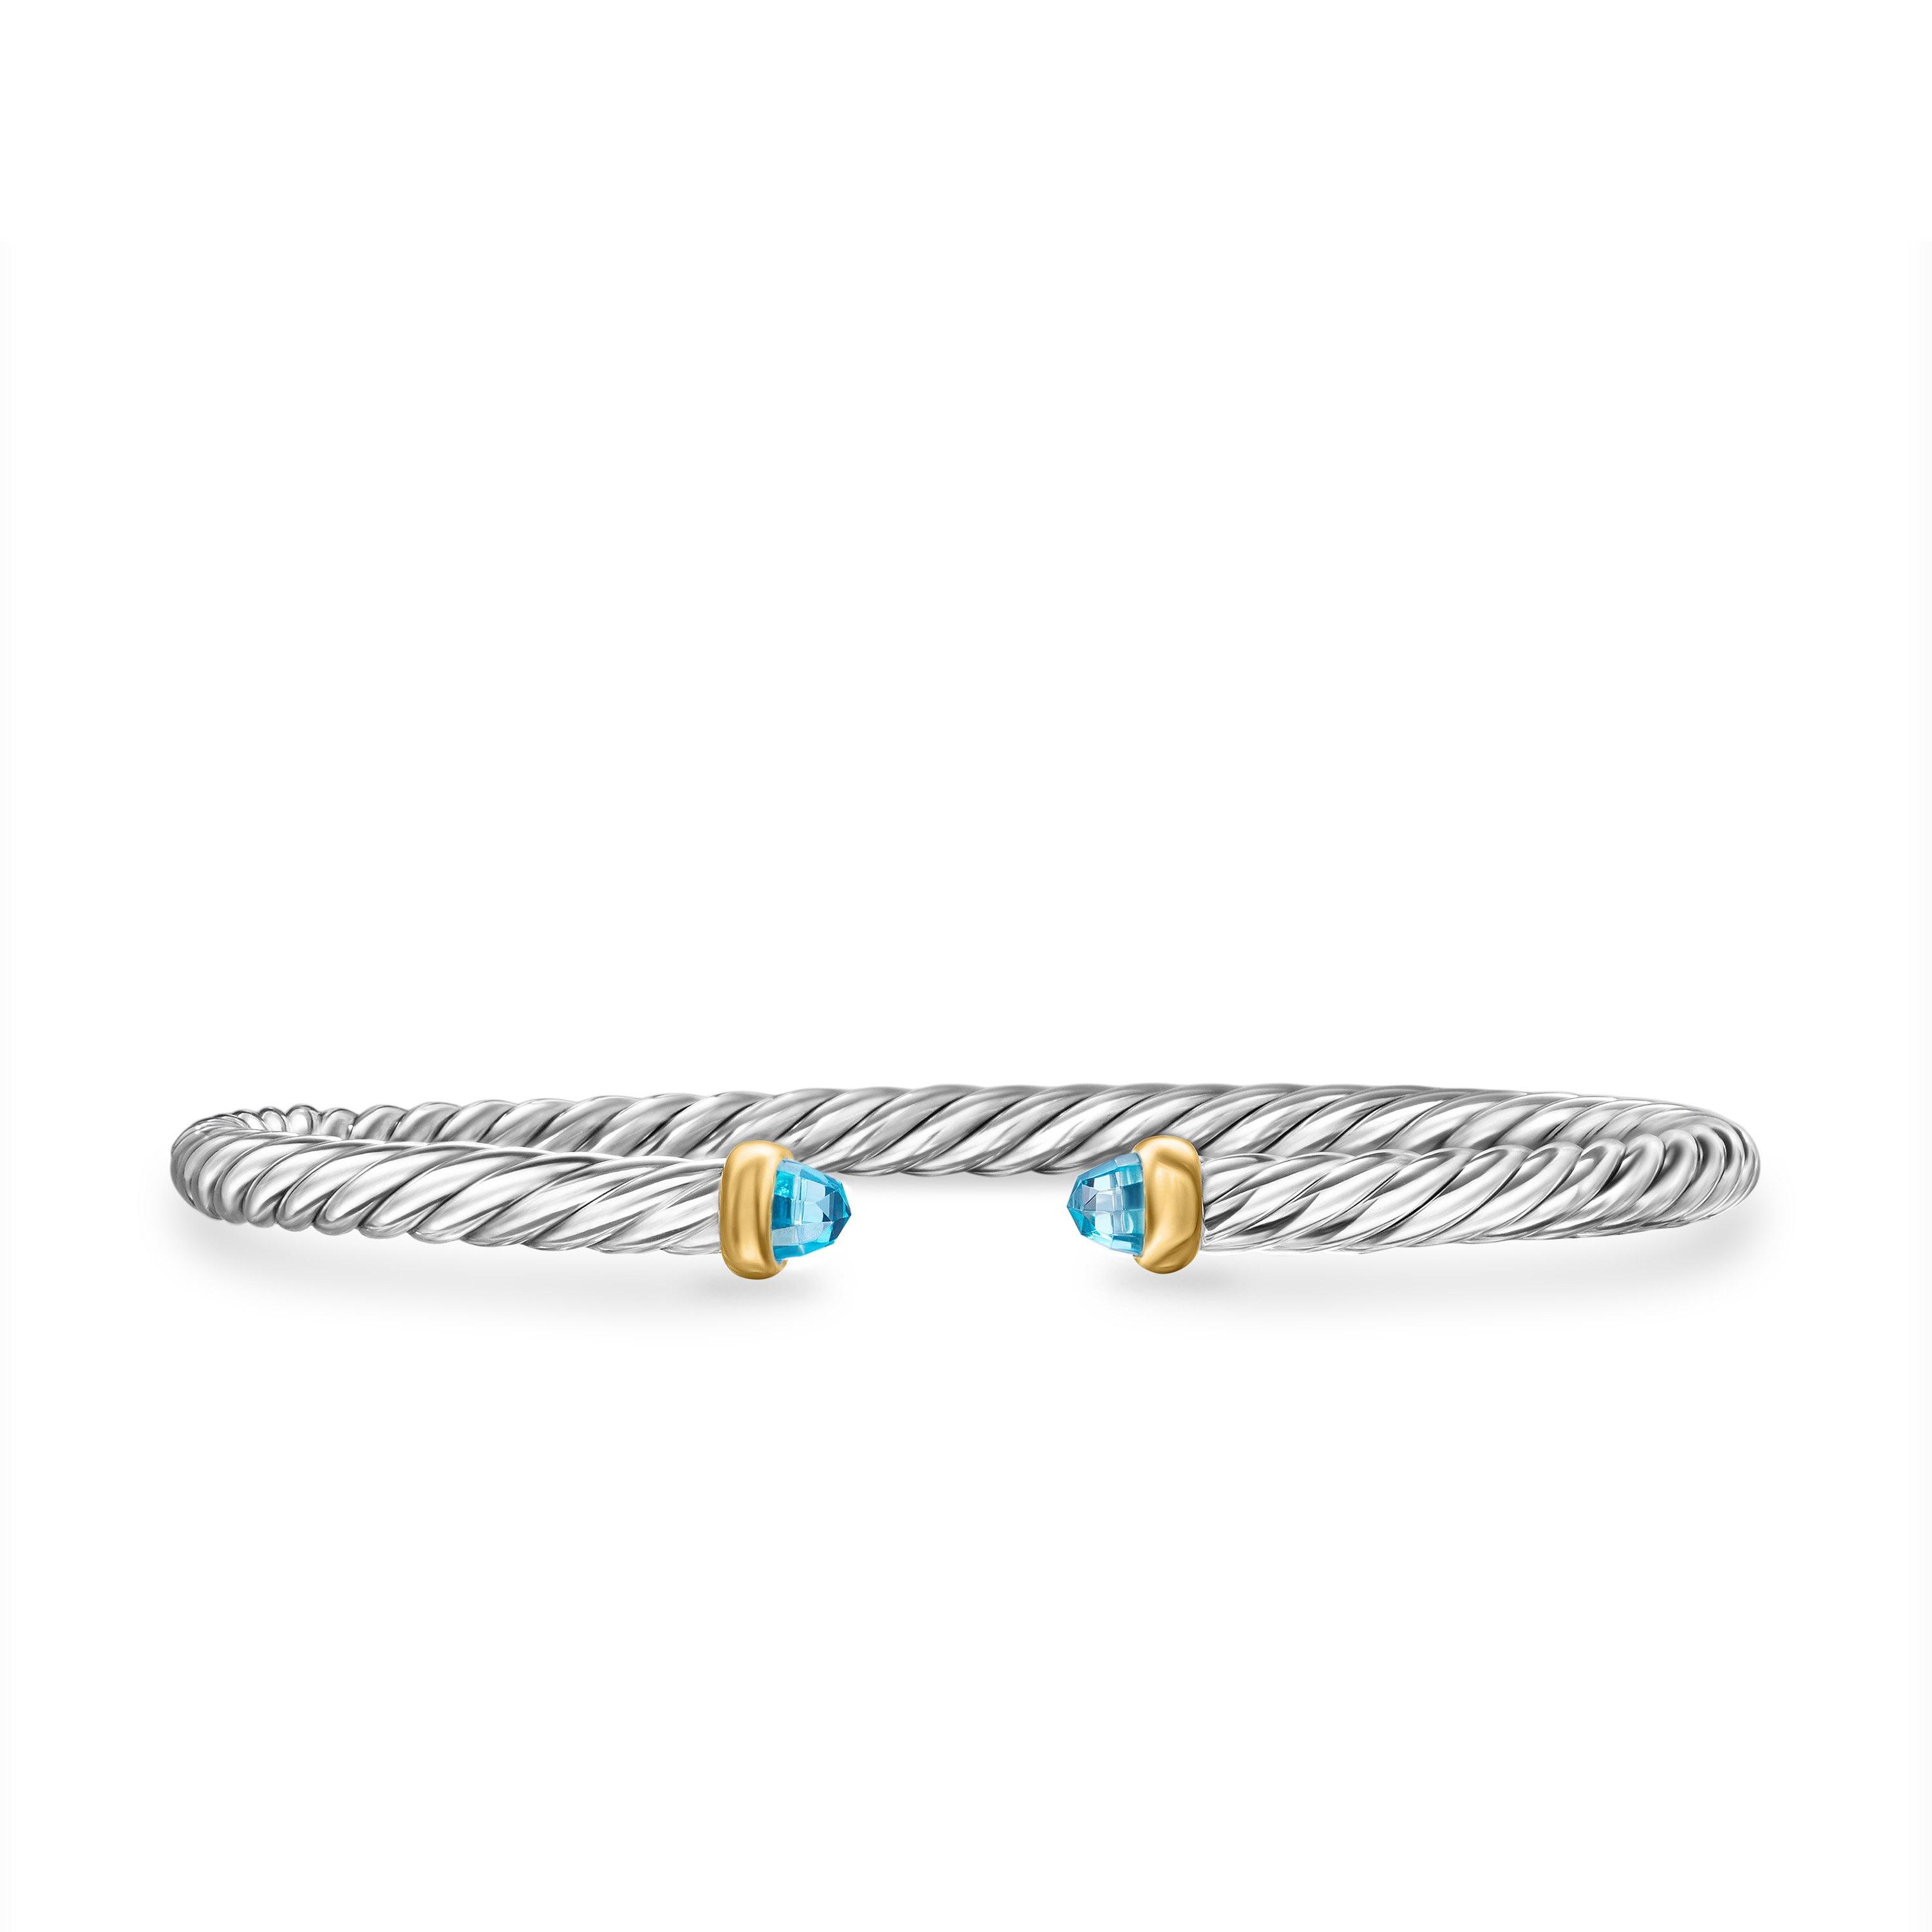 David Yurman Cable Flex Sterling Silver Bracelet with Blue Topaz, Size Small